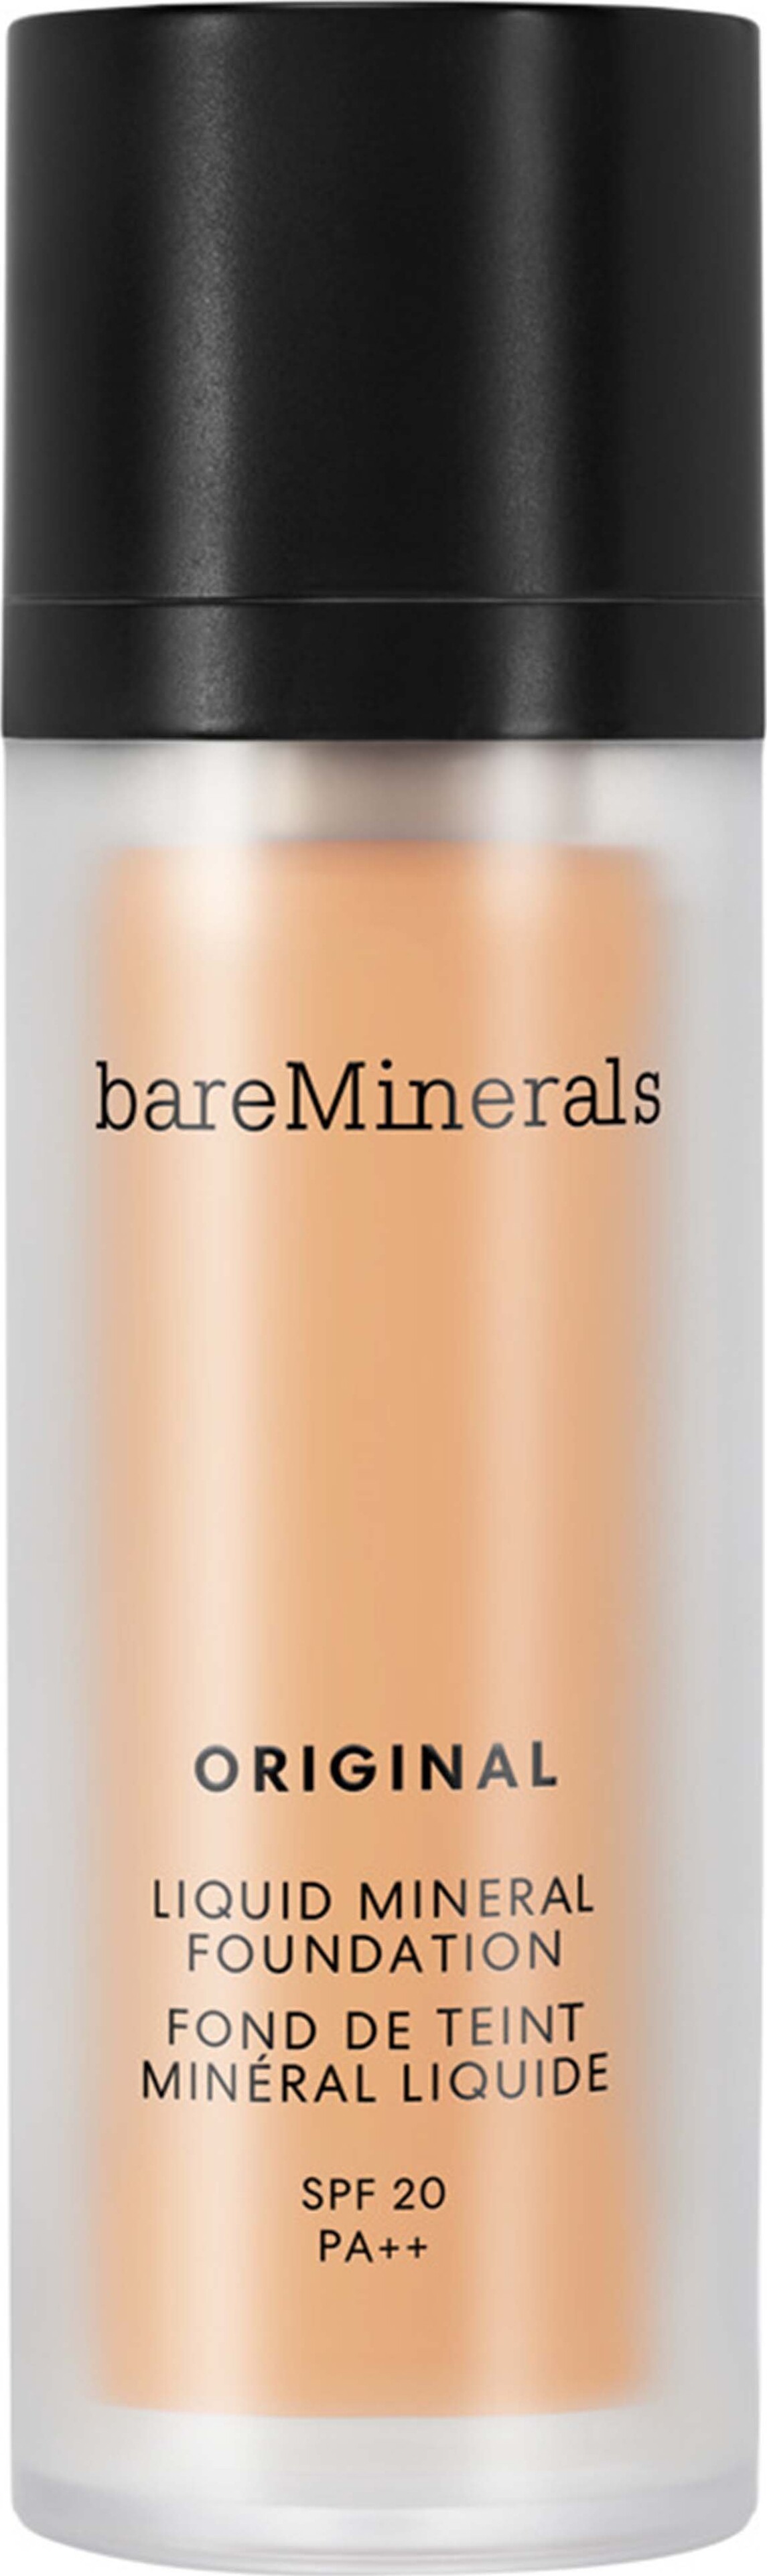 Bareminerals - Original Liquid Mineral Foundation - Medium Beige 12